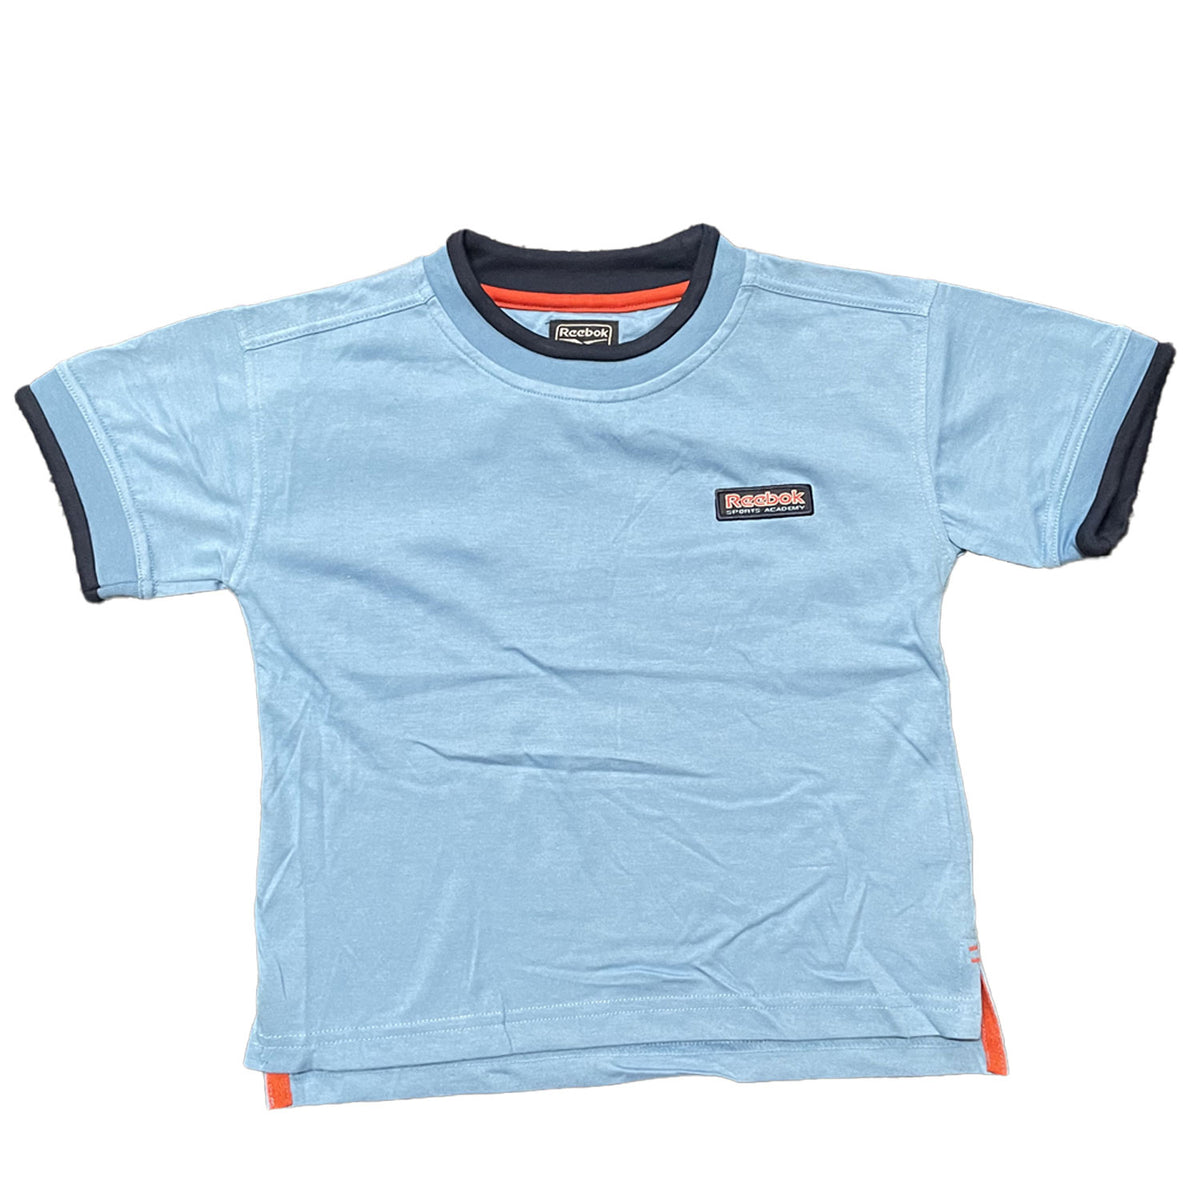 Reebok's Infant Sports Academy T-Shirt 6